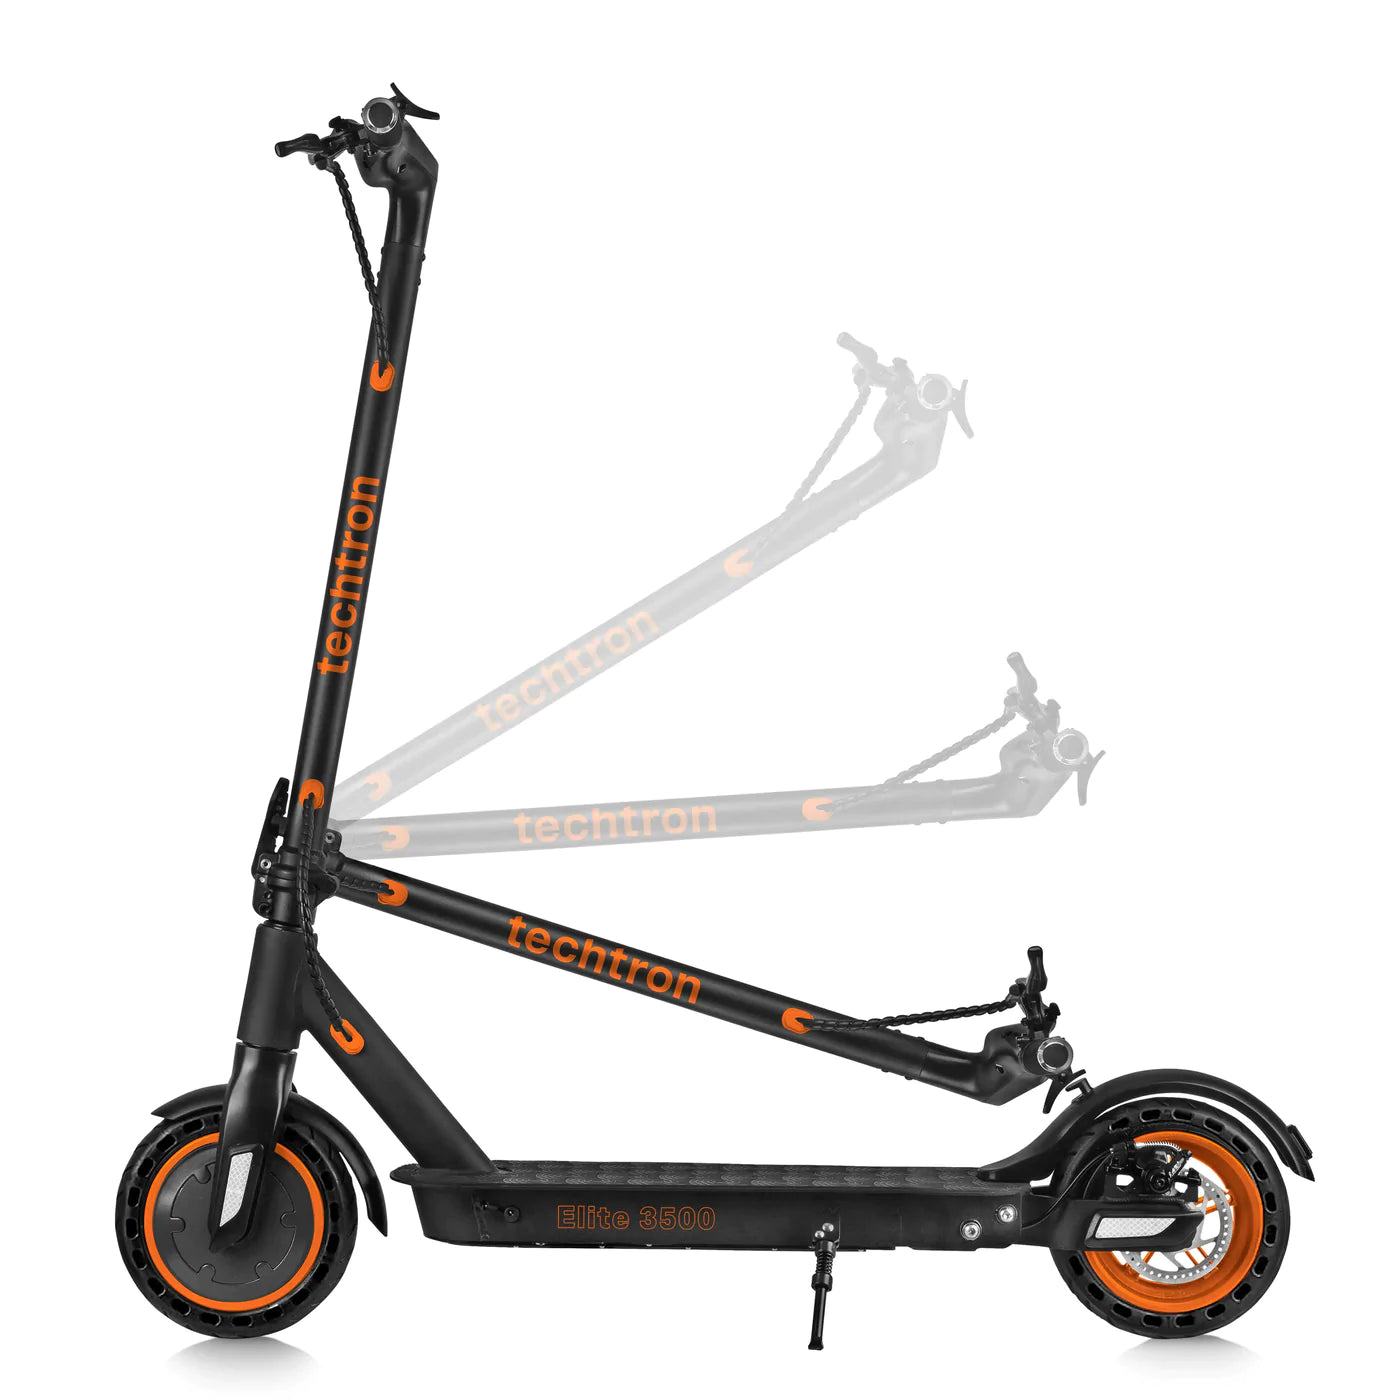 Techtron® Elite 3500 Foldable Electric Scooter 